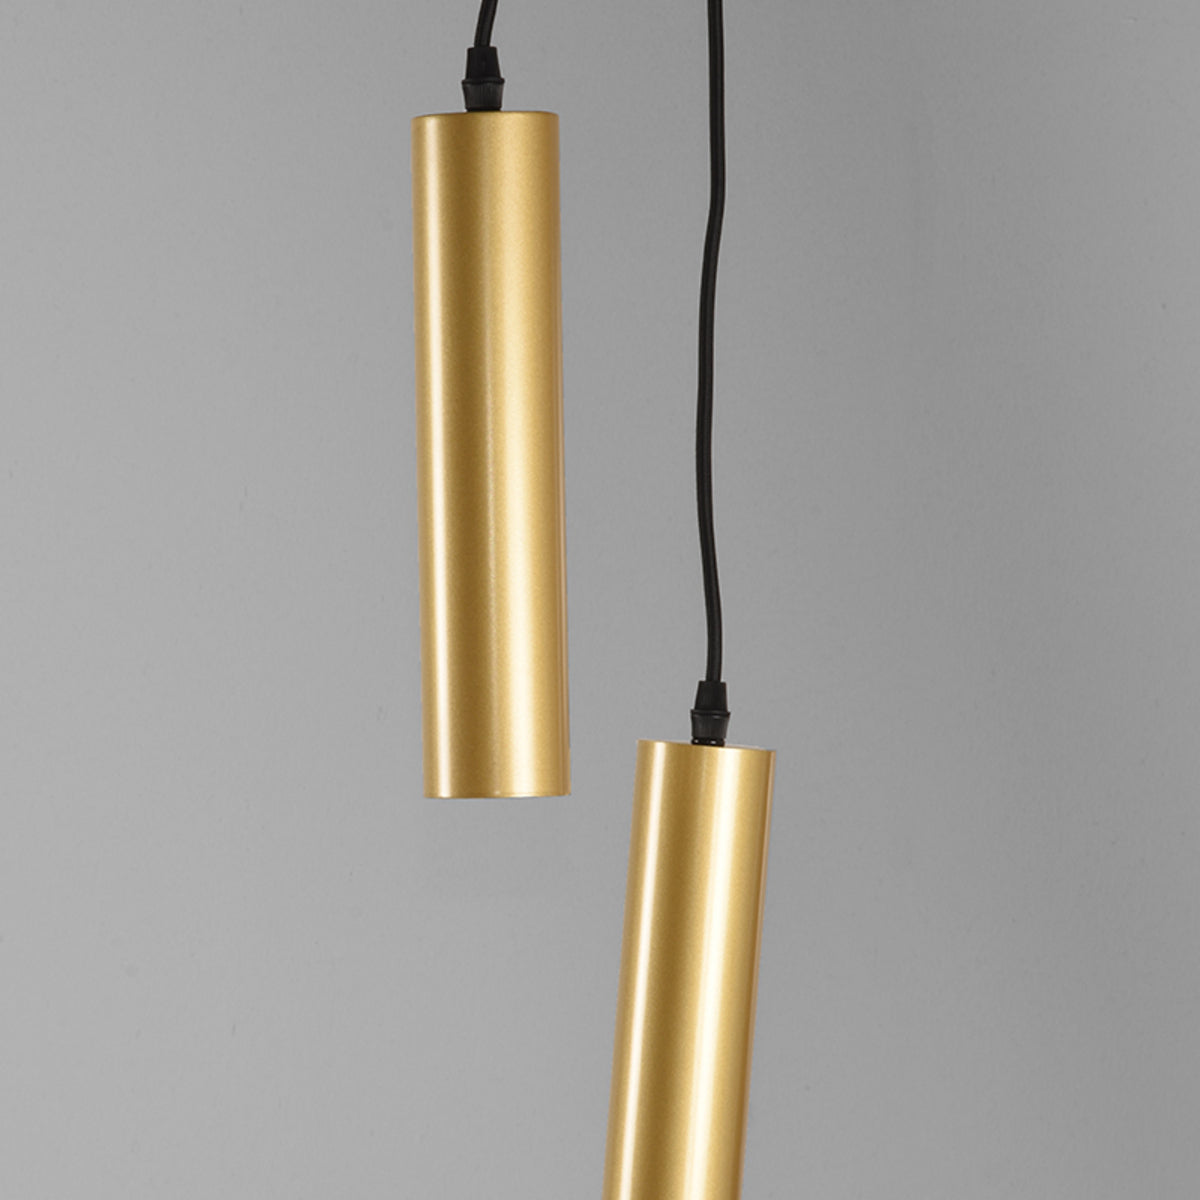 LABEL51 Hanging lamp Ferroli - Antique gold - Metal - 3-light